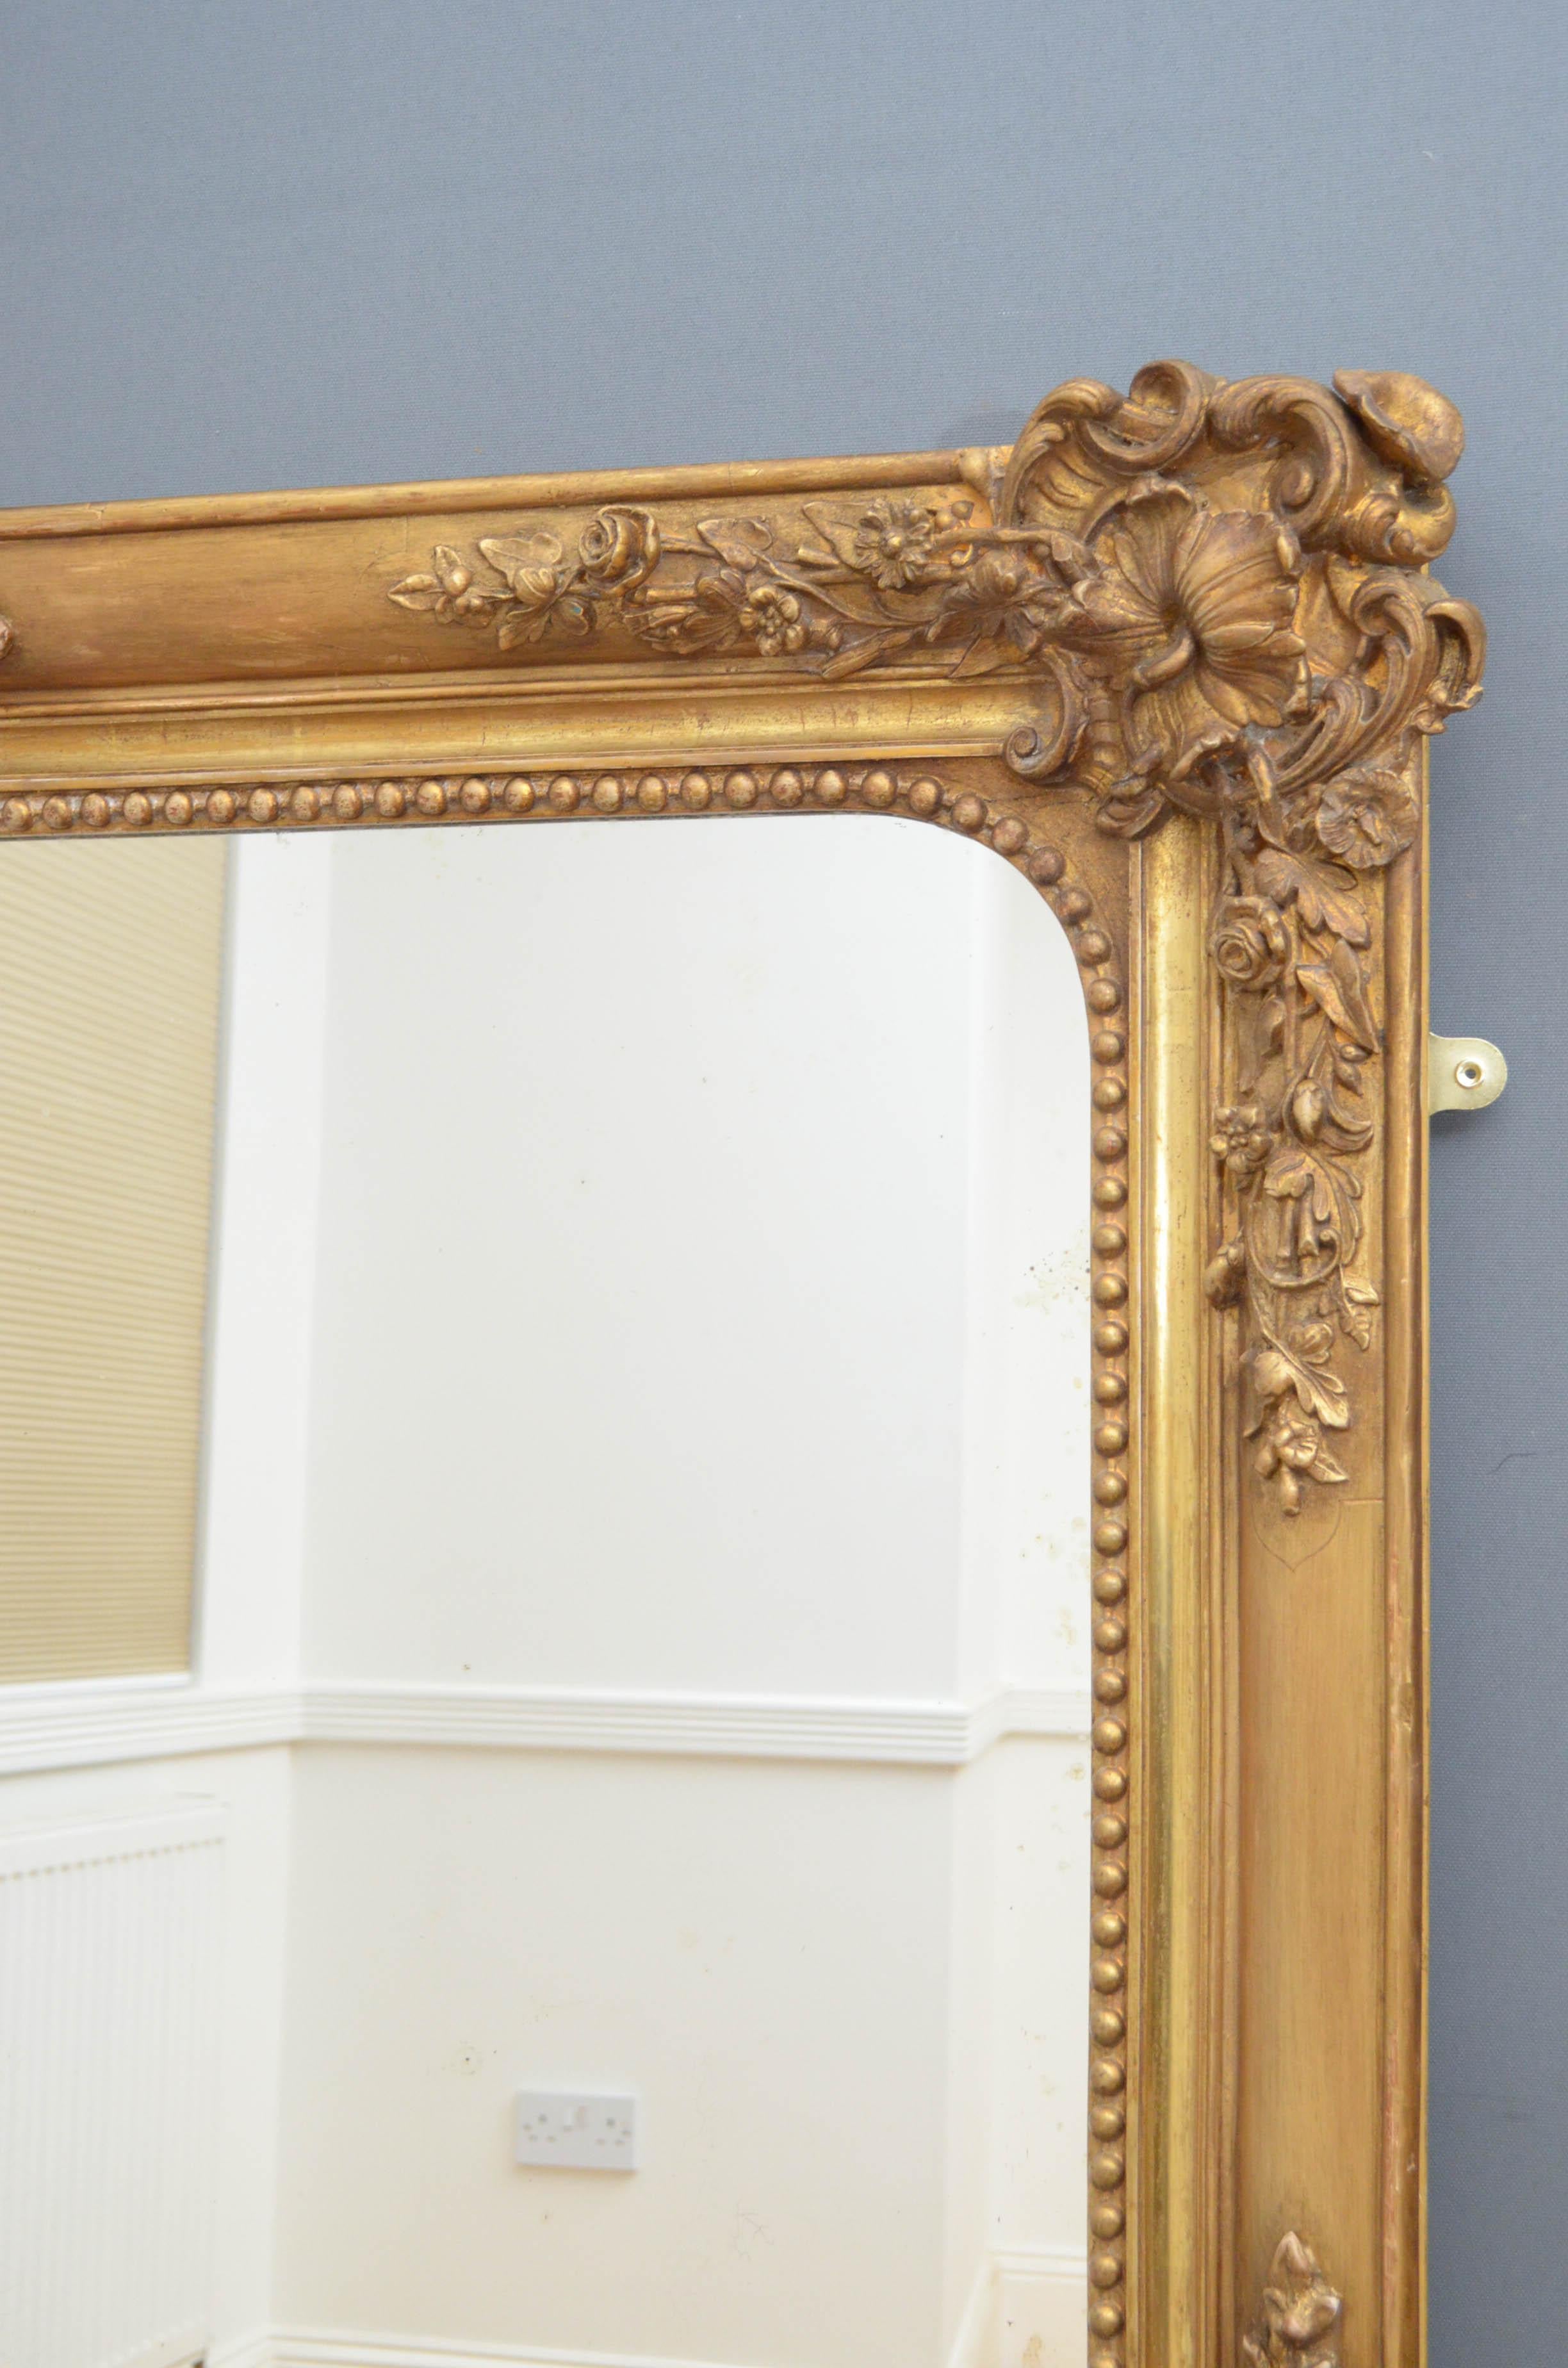 Gesso Superb 19th Century Gilded Wall Mirror